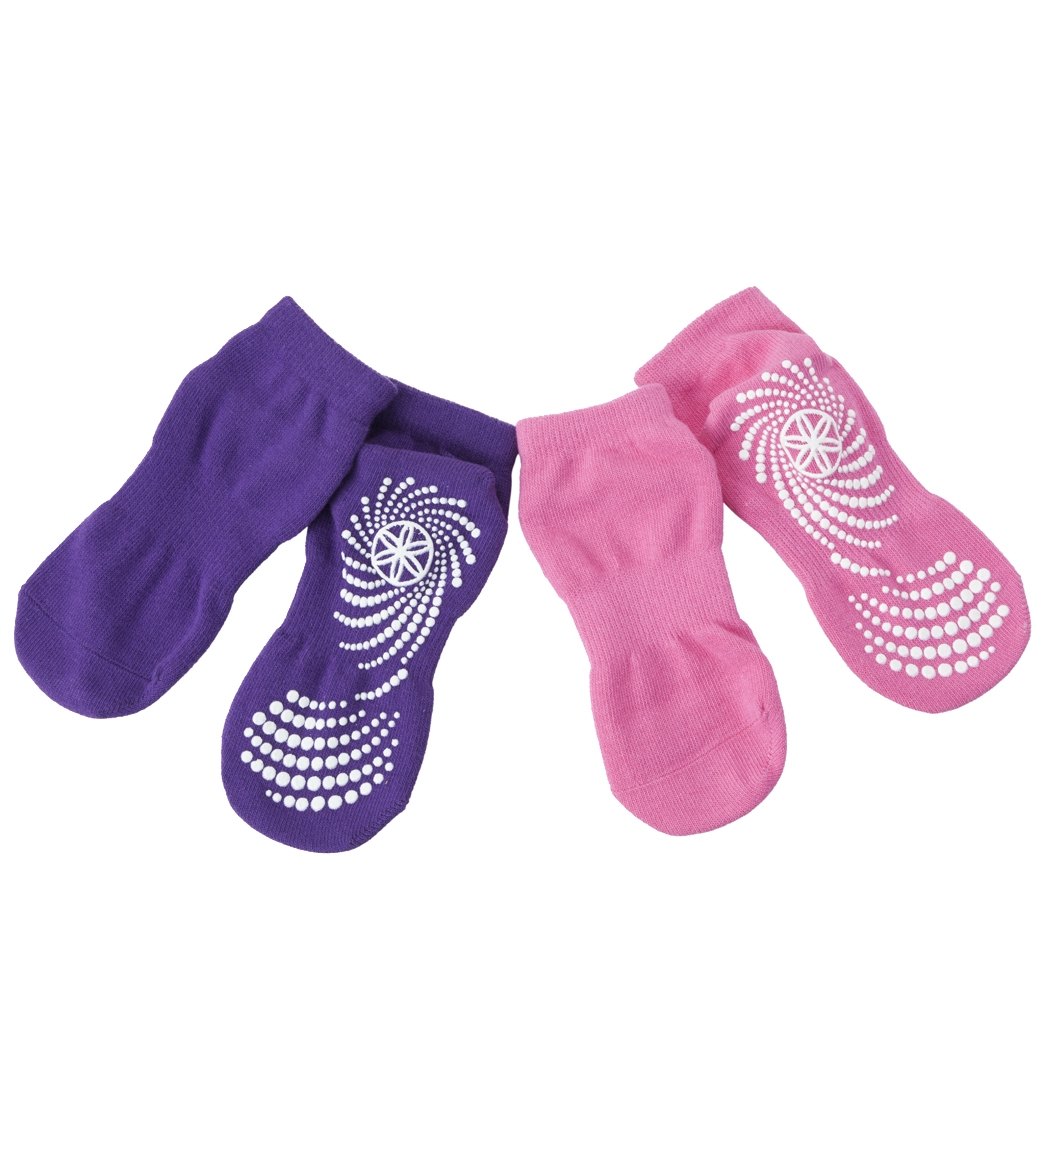 Gaiam Kids Yoga Socks Pink/Purple Assortement